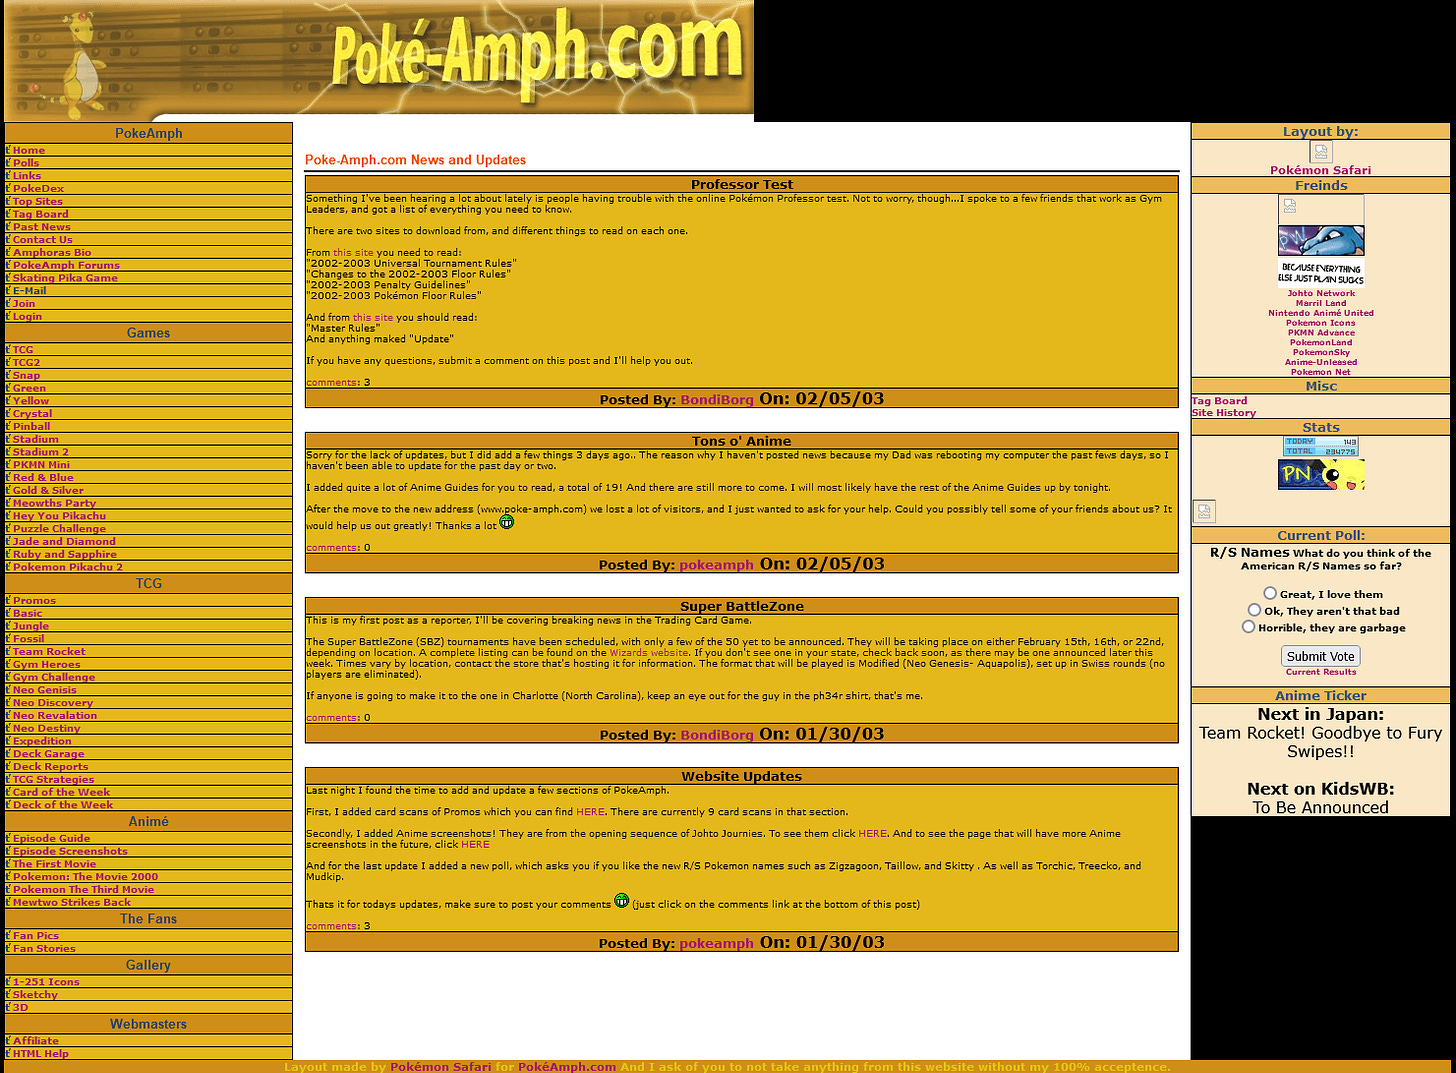 Poké-Amph’s layout from February 2003